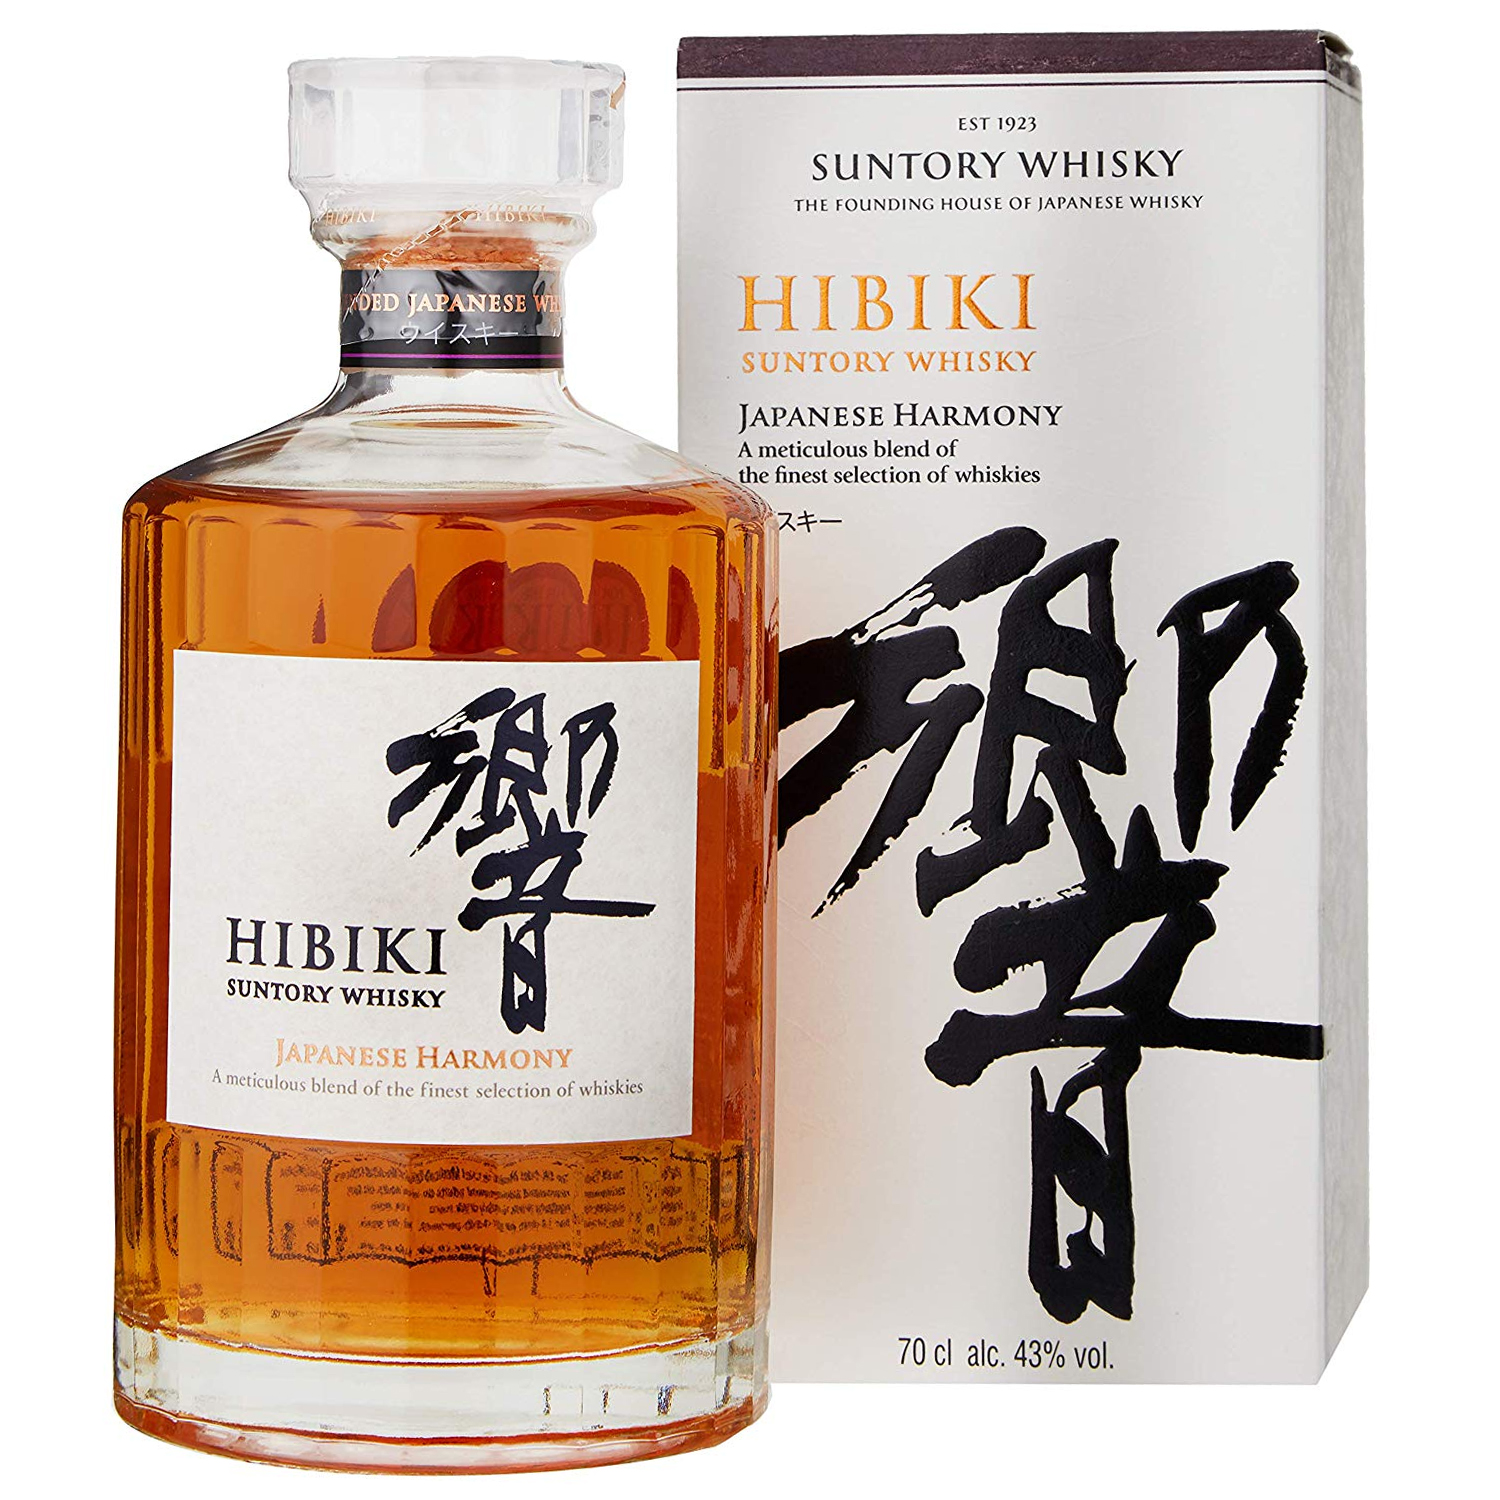 Hibiki Japanese Harmony Suntory Whisky, 70 cl